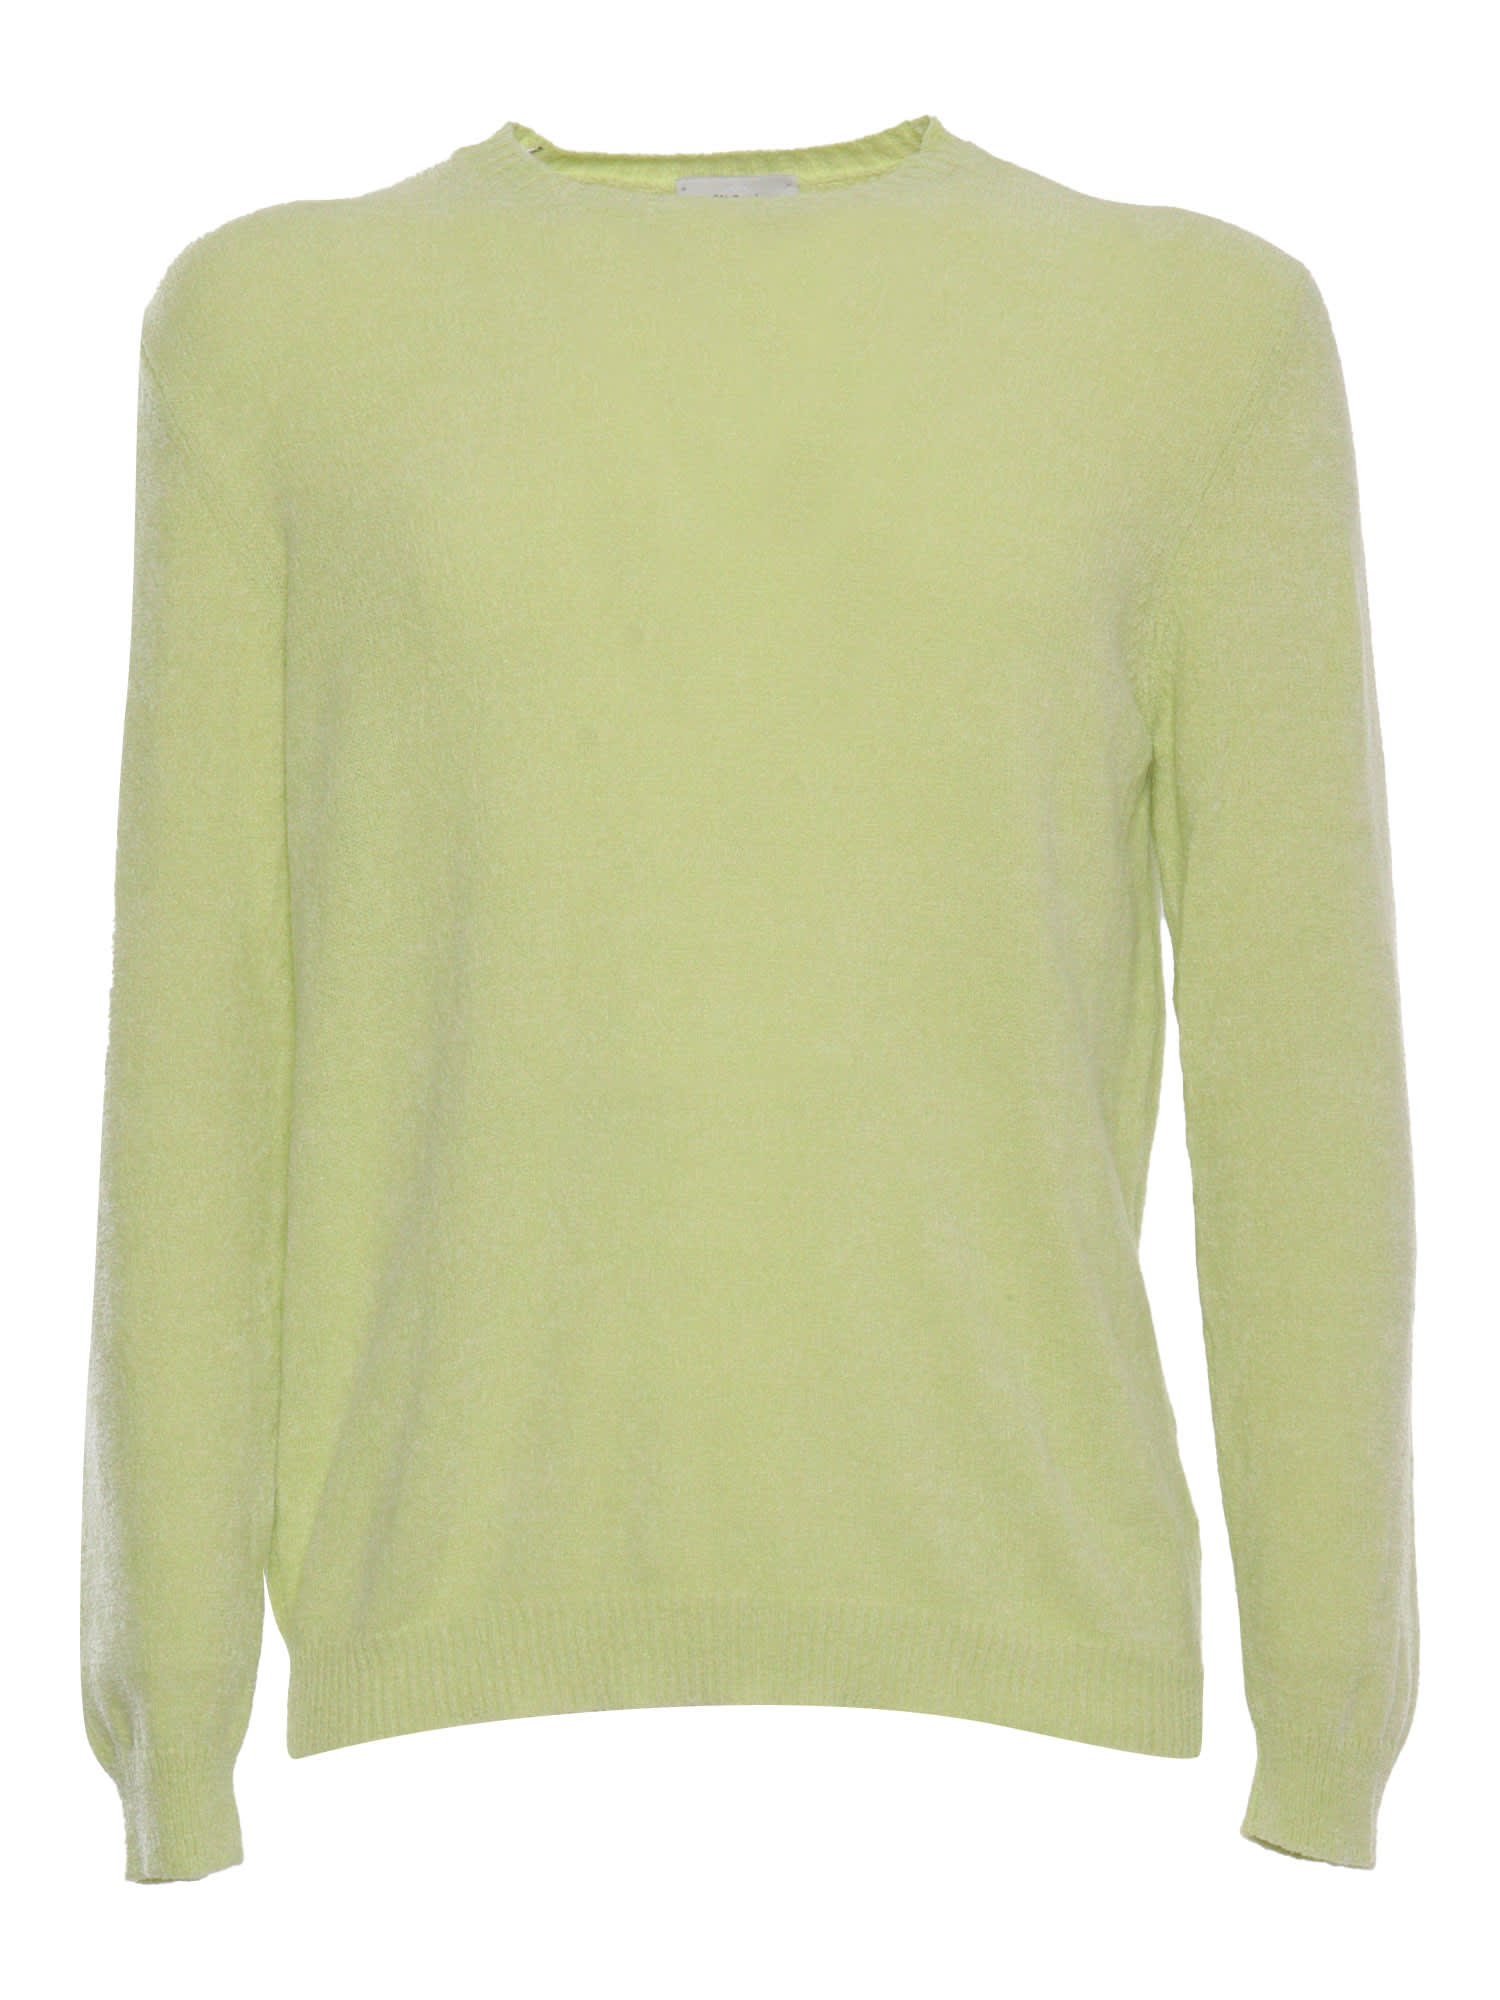 Shop Settefili Cashmere Green Sweater